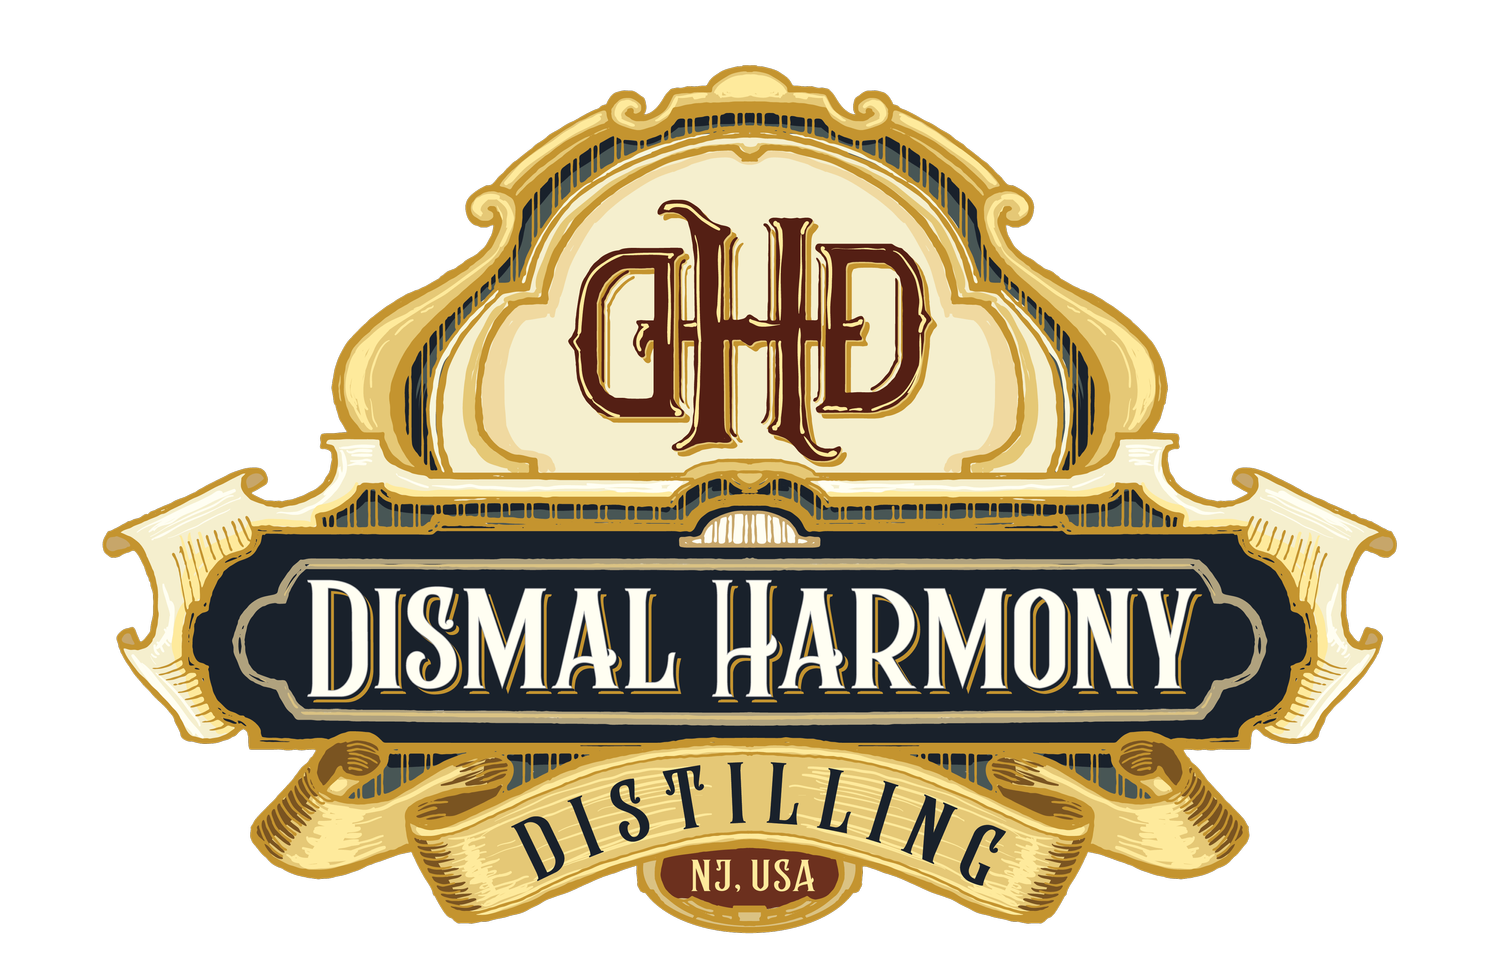 Dismal Harmony Distilling